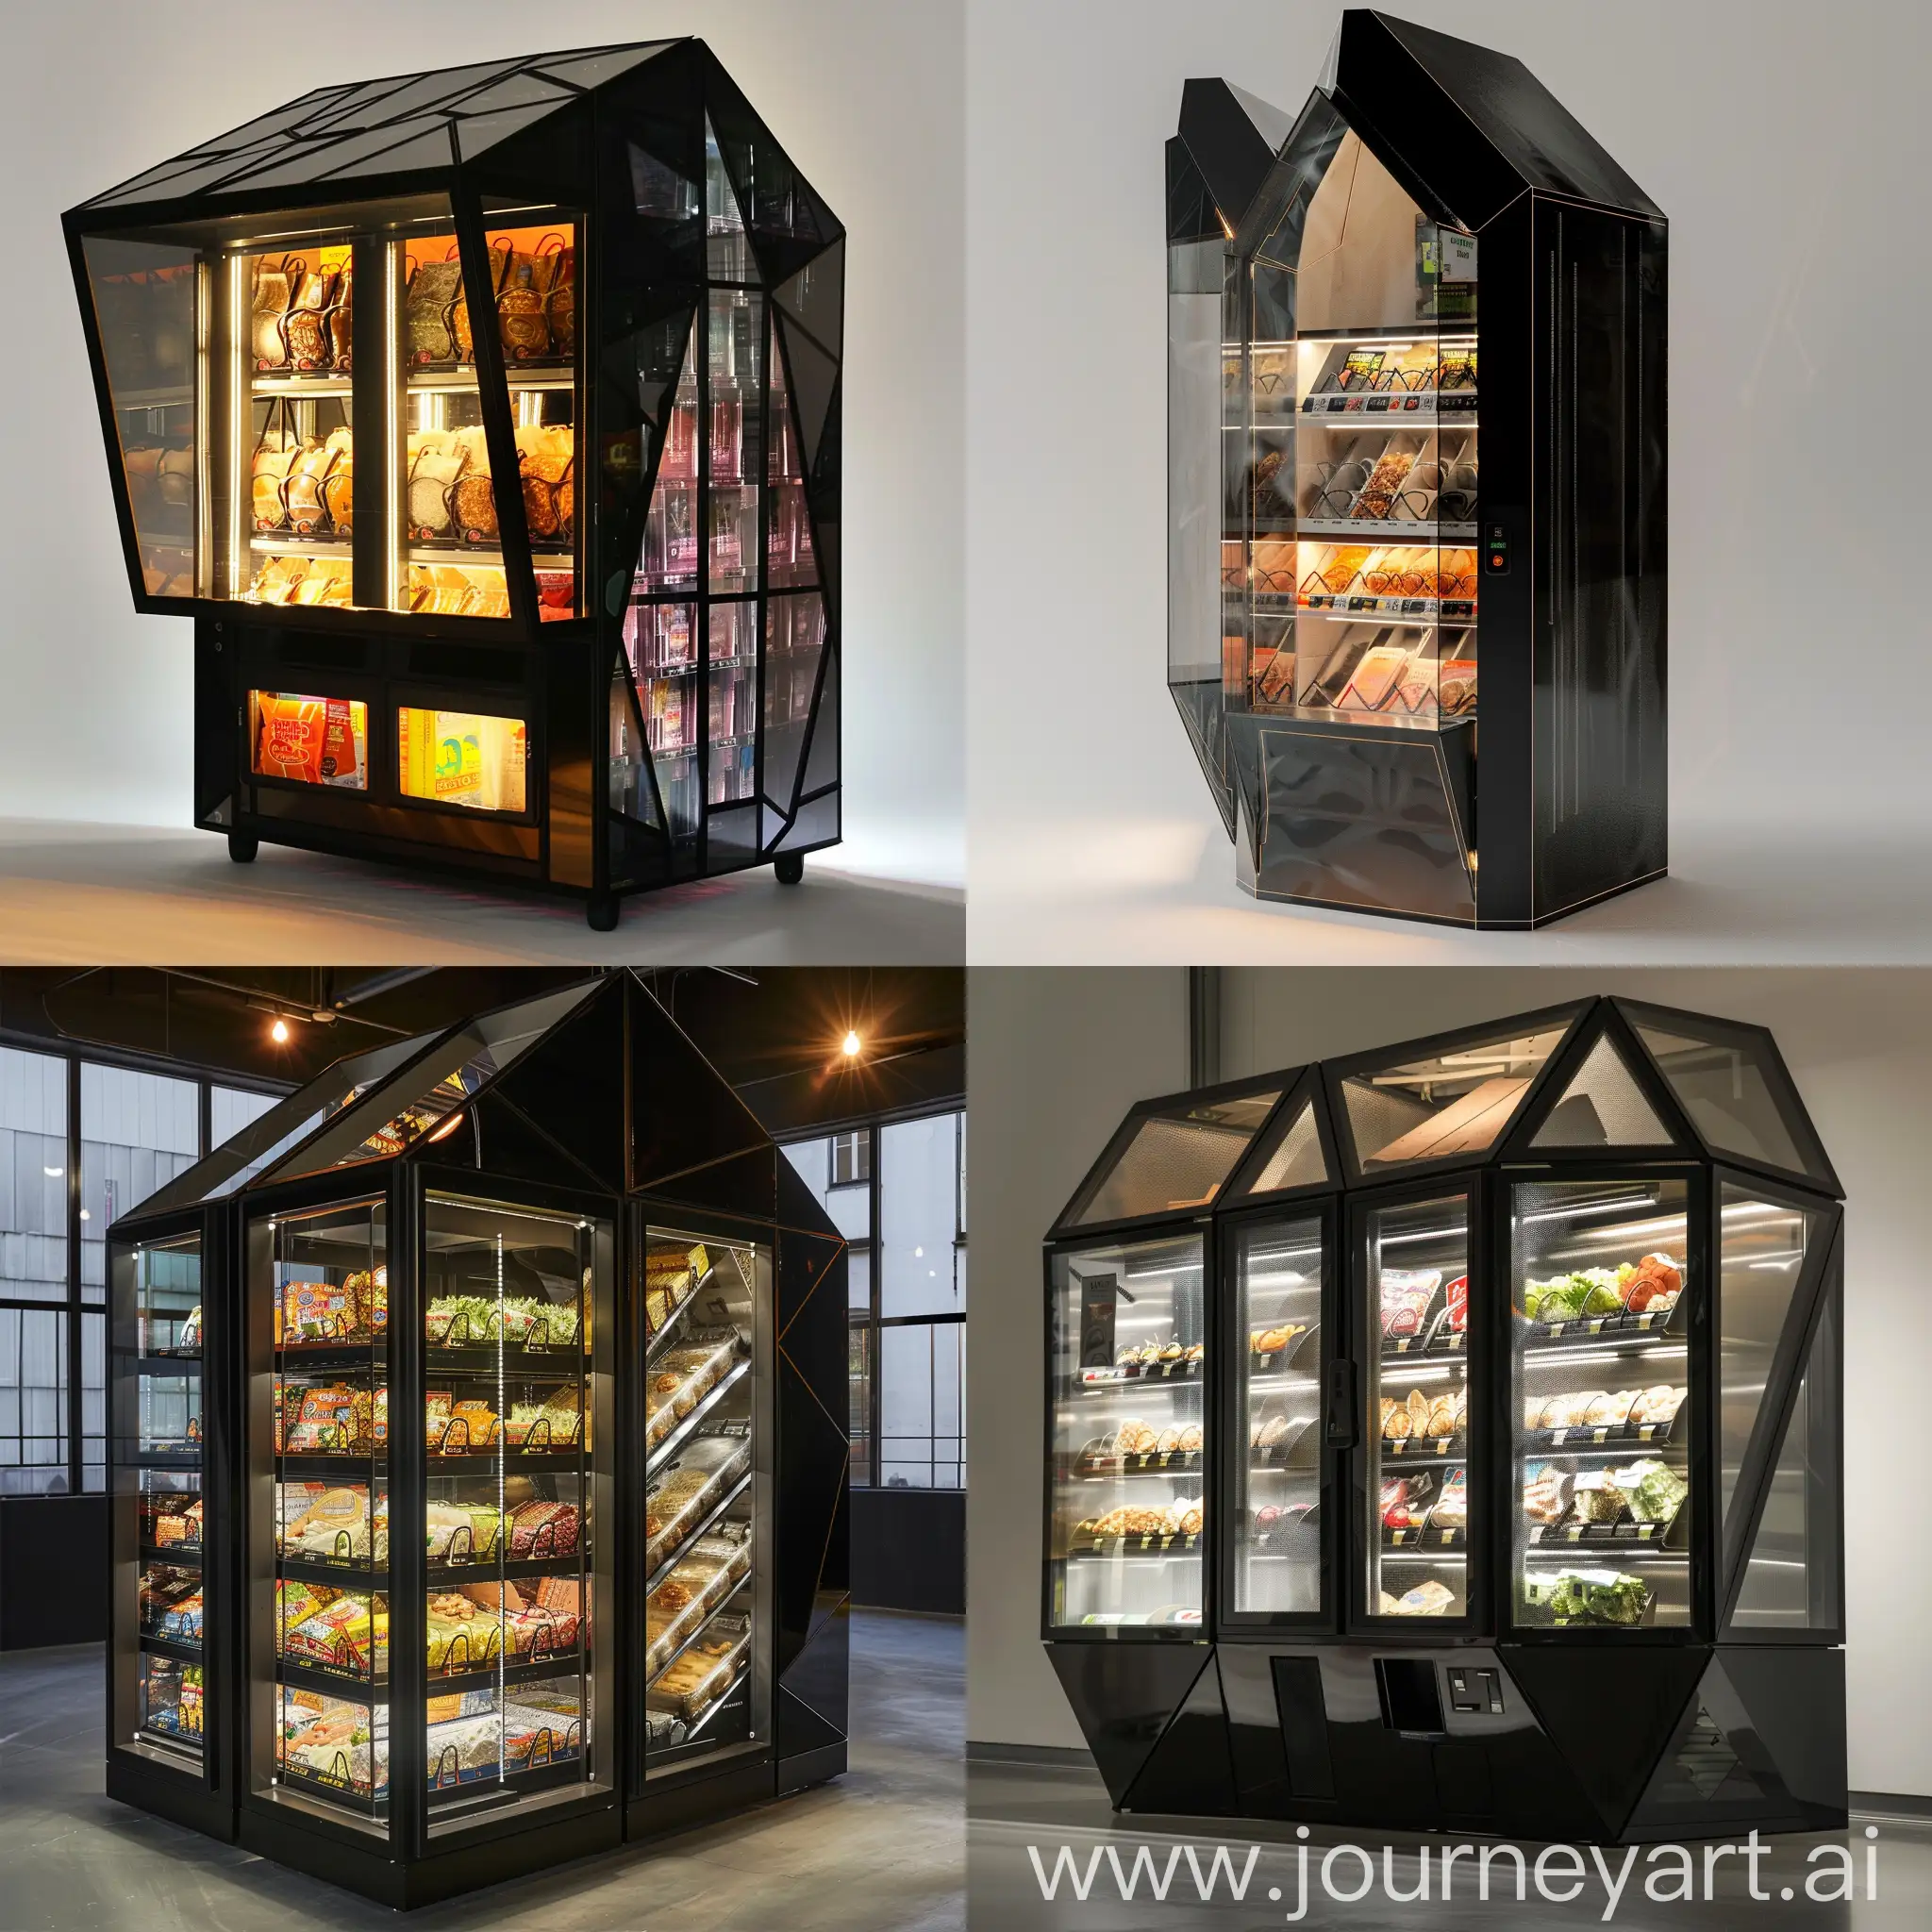 Sleek-Black-Glass-Frozen-Food-Vending-Machine-with-Illuminated-Architecture